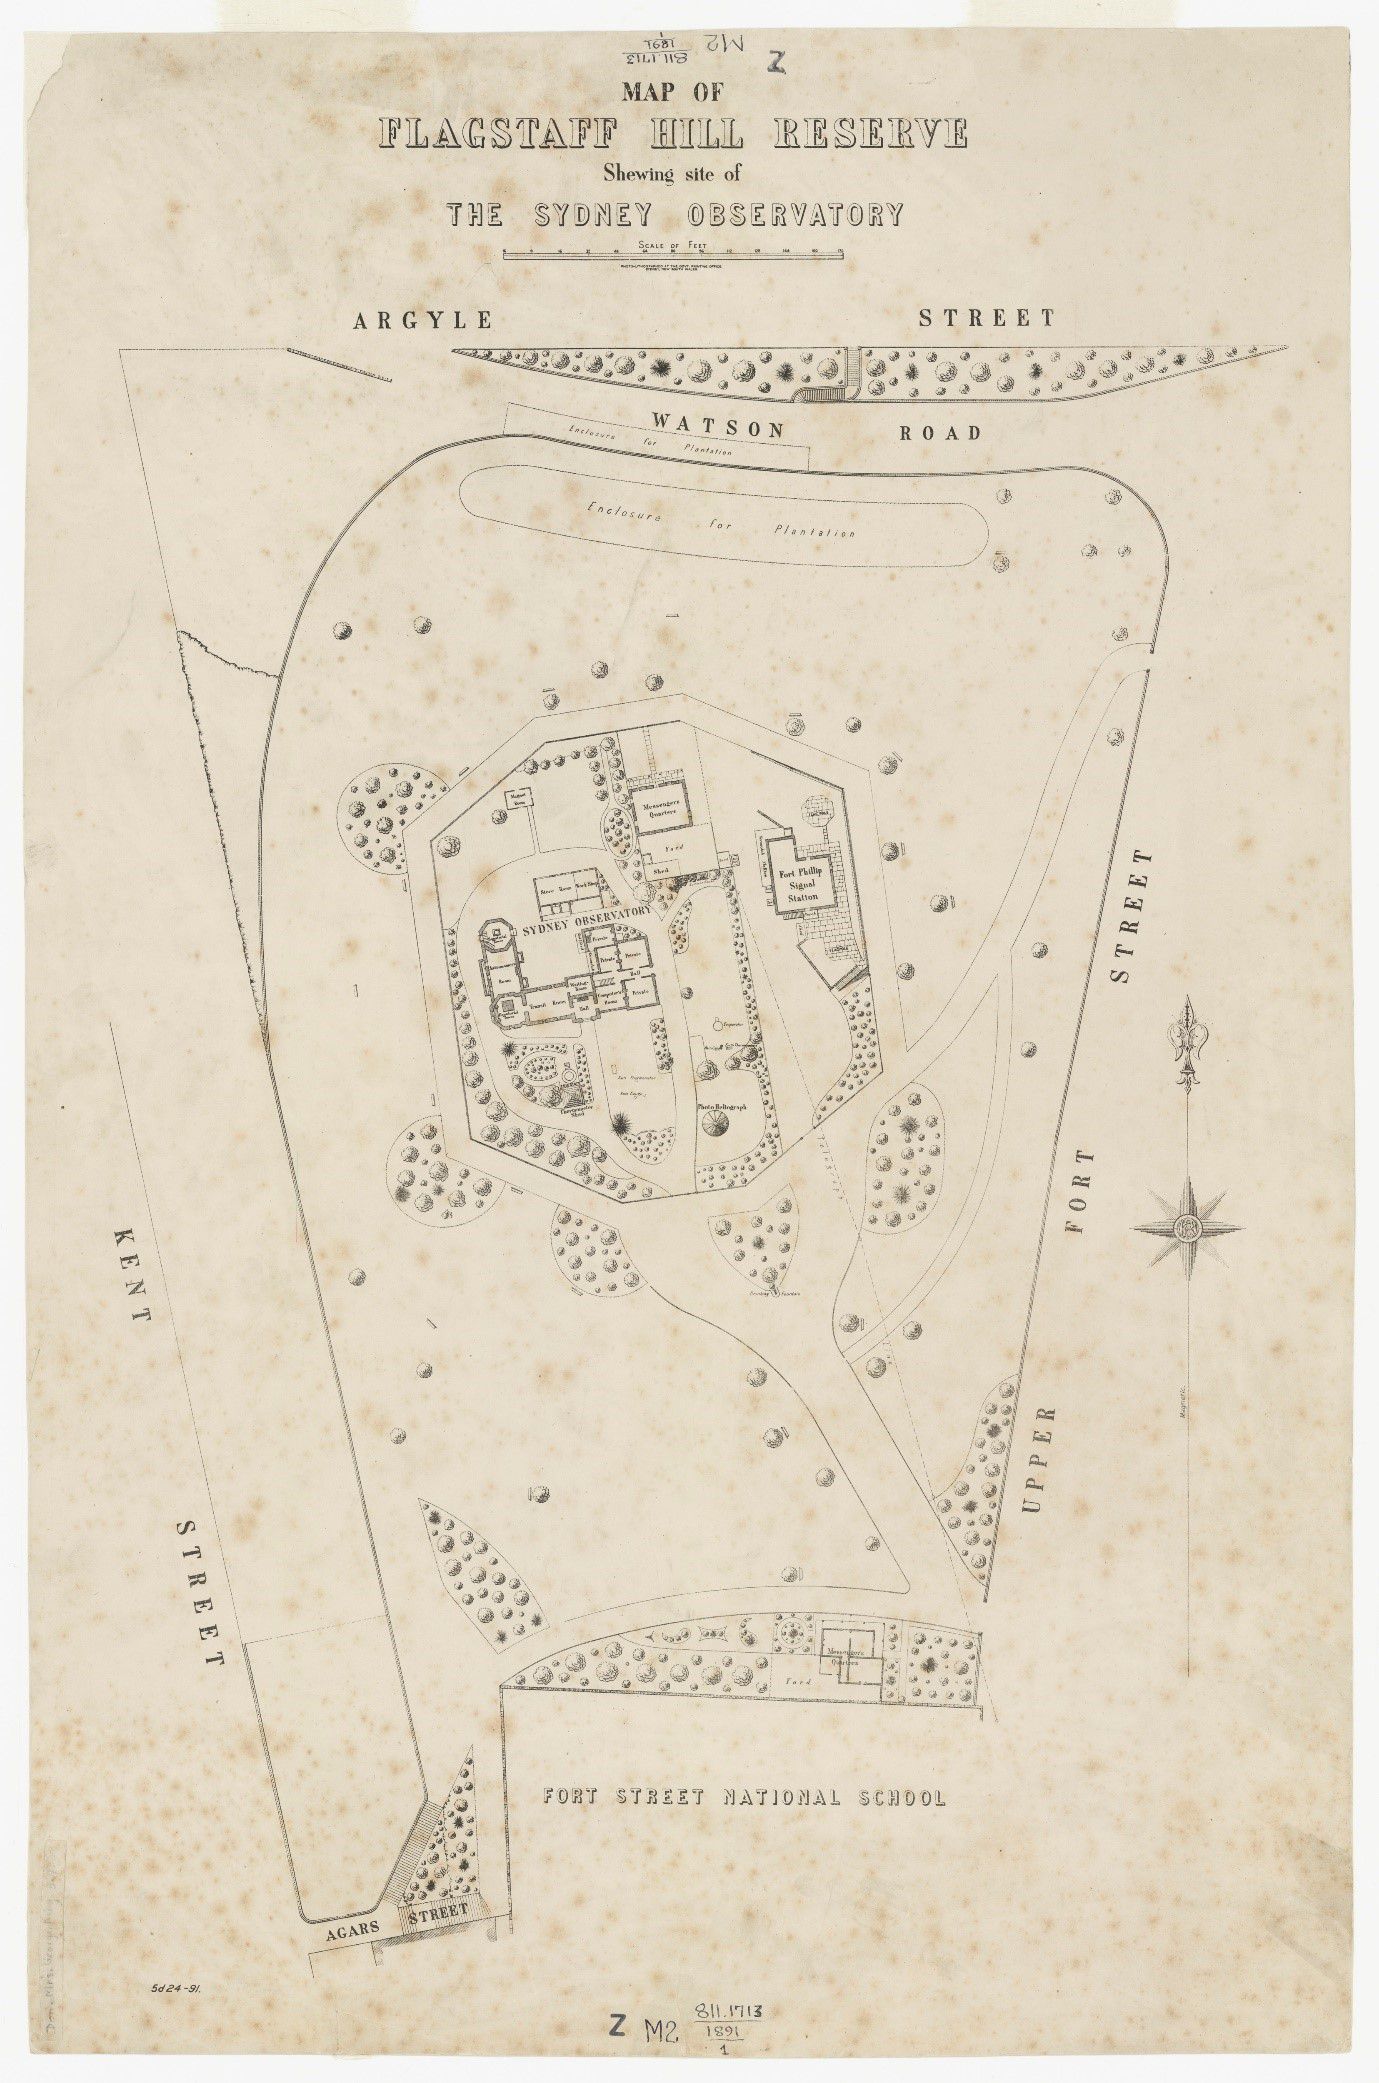 Map of Flagstaff Hill reserve showing site of the Sydney Observatory, Sydney: Surveyor Generals Office, 1859, SLNSW M2 811.1713/1891/1.